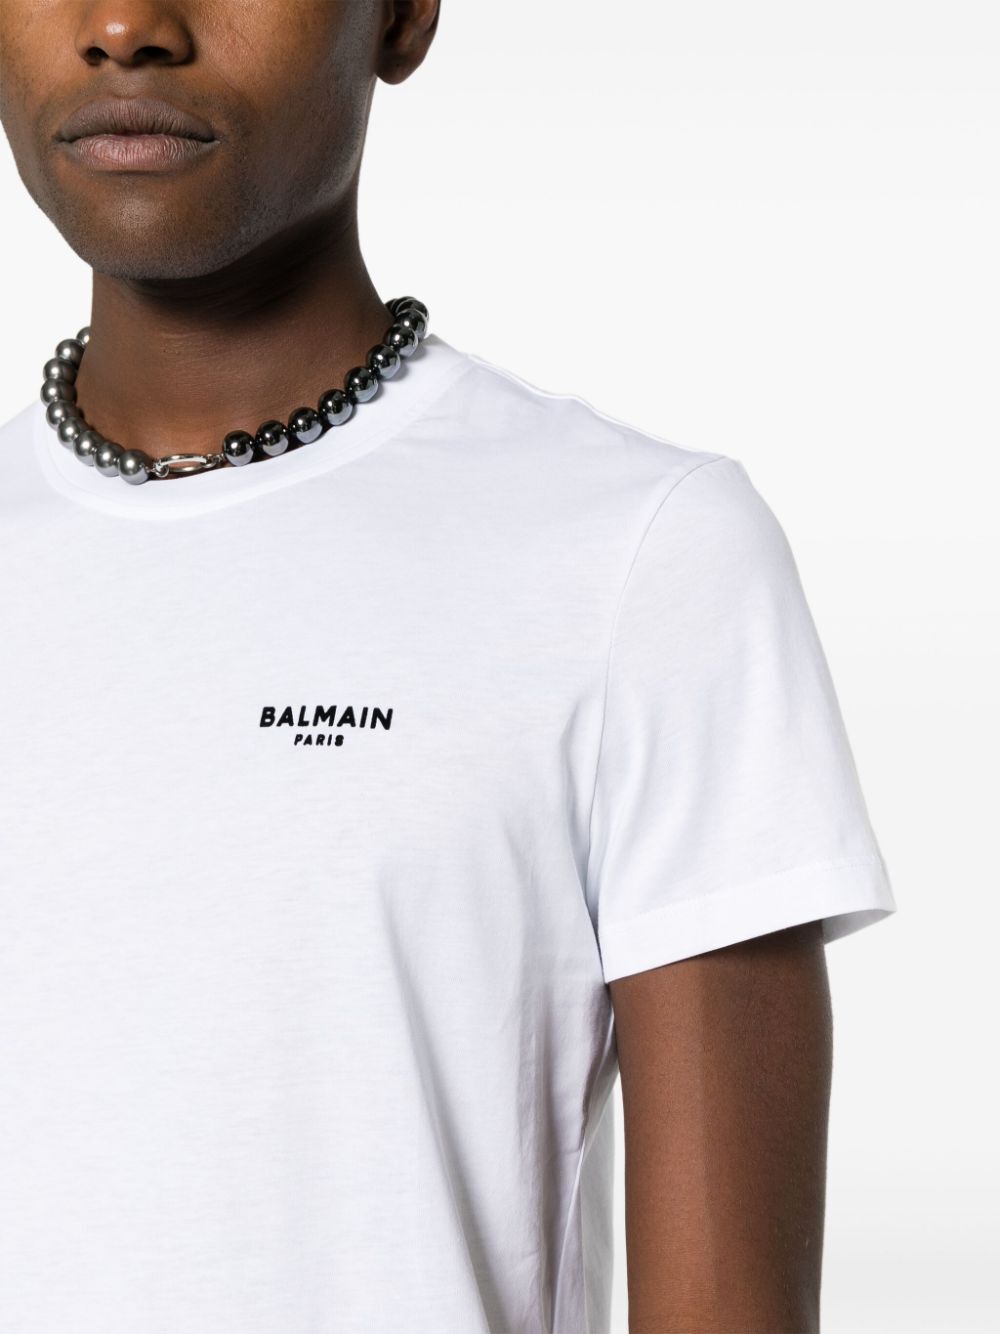 Balmain Flock T-shirt Classic Fit